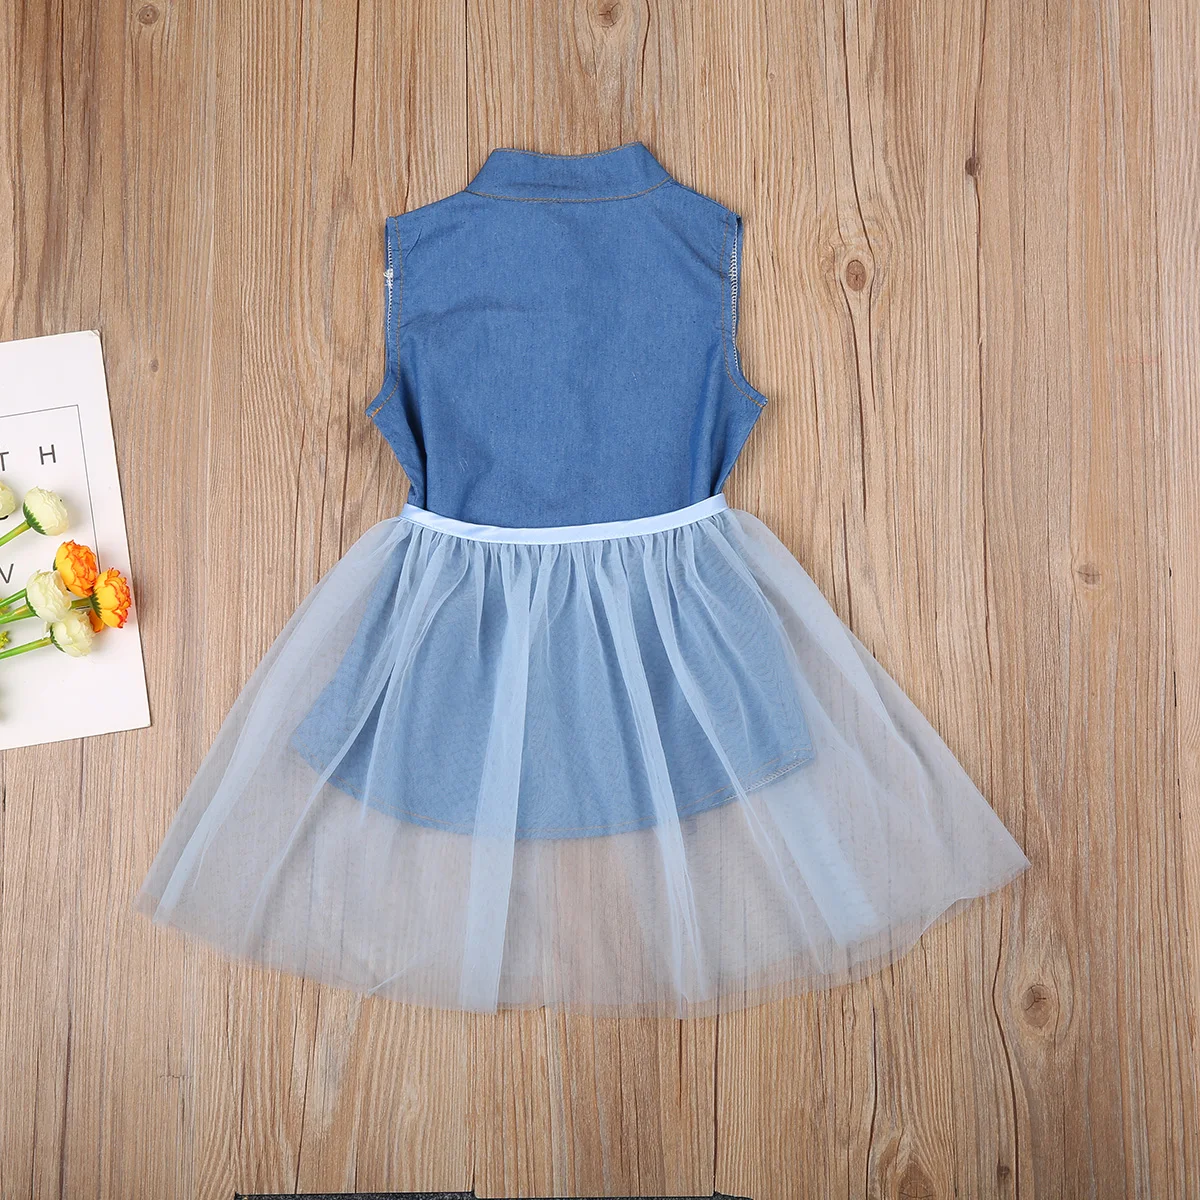 Multitrust Girl Dress 2020 Toddler Girl Dress Set Sleeveless Demin Dress +Tutu Lace Skirts 2pcs Soze 1-6Y images - 6